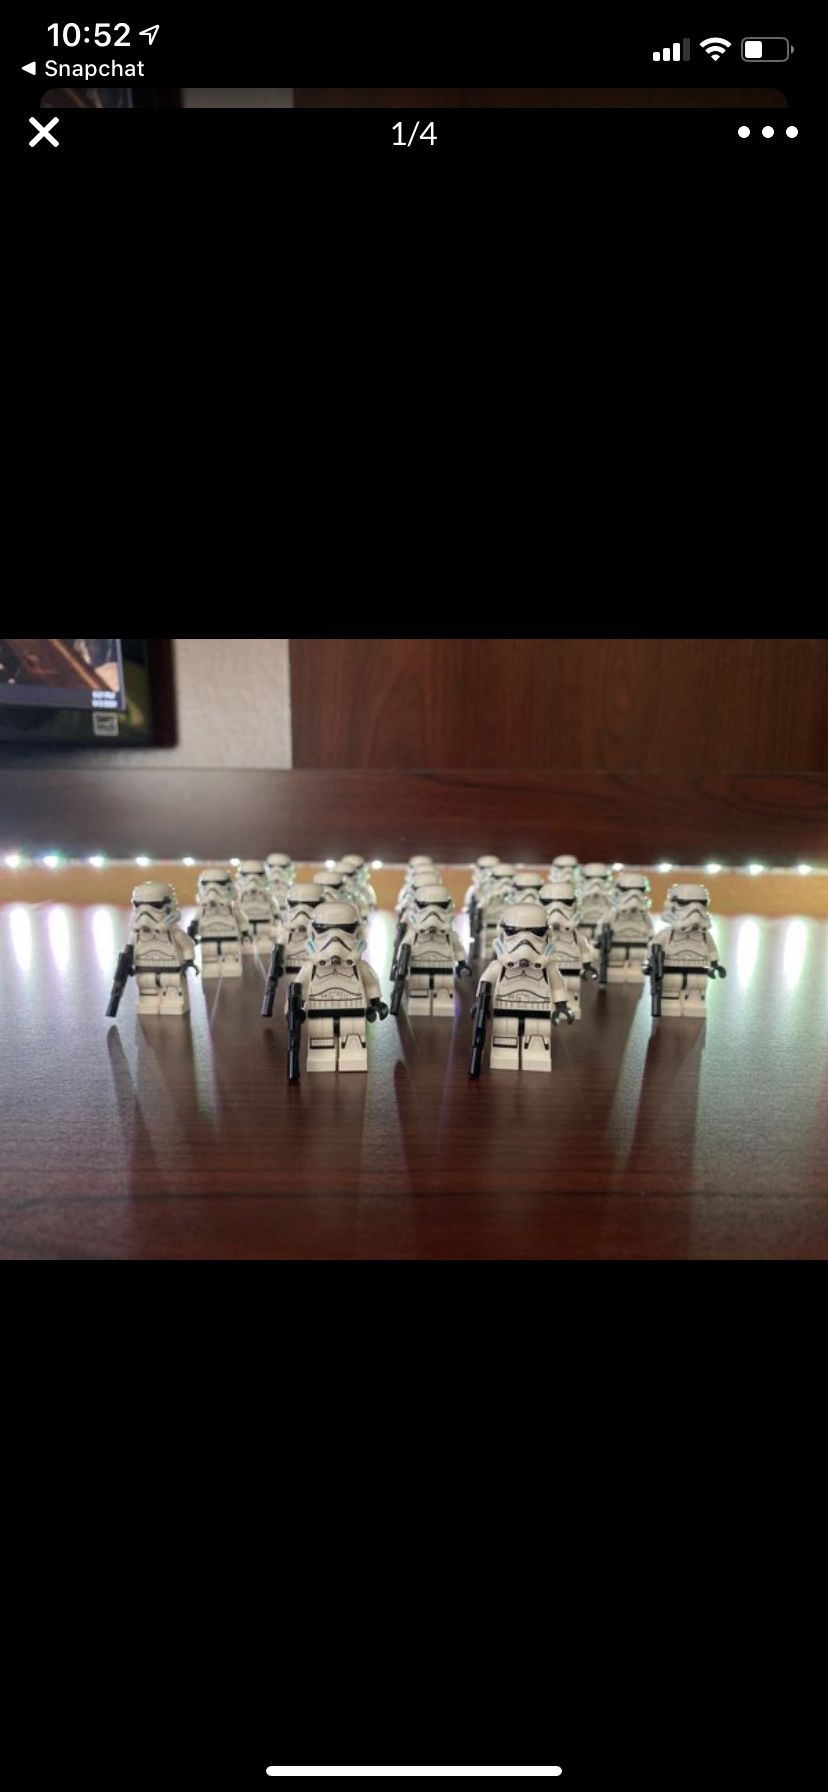 LEGO stormtroopers